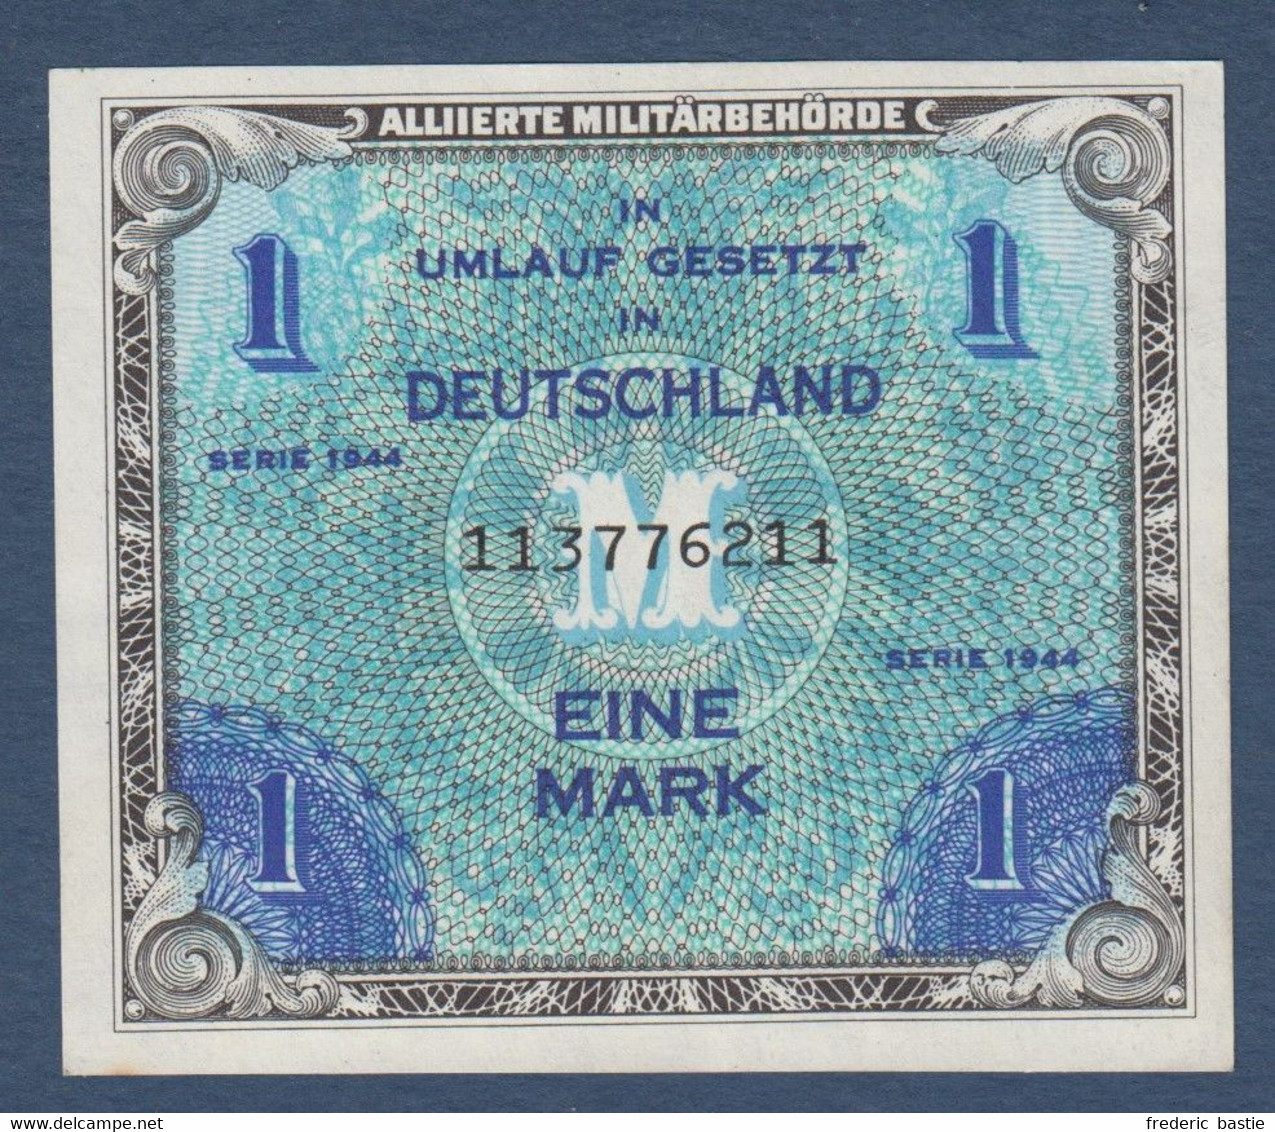 ALLEMAGNE - Billet De 1 Mark De 1944 - 1 Mark